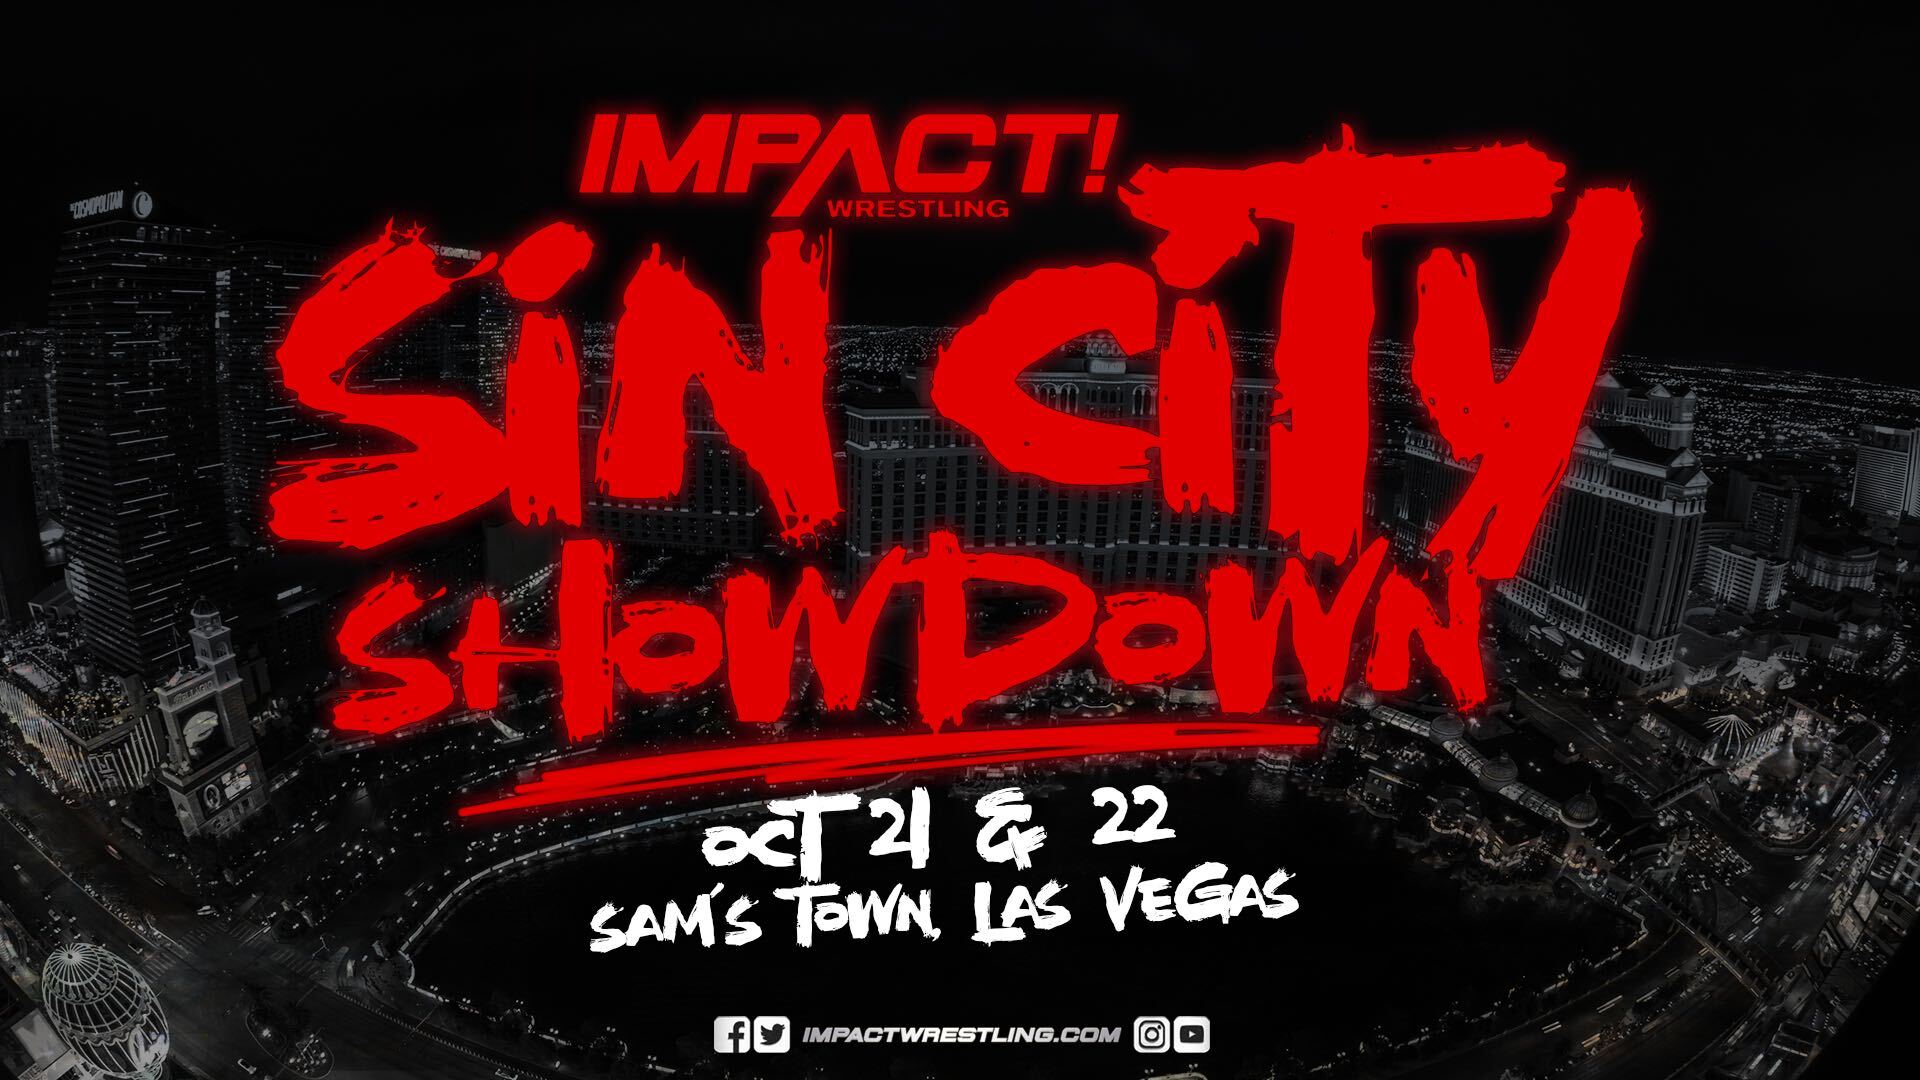 Impact wrestling sin city showdown